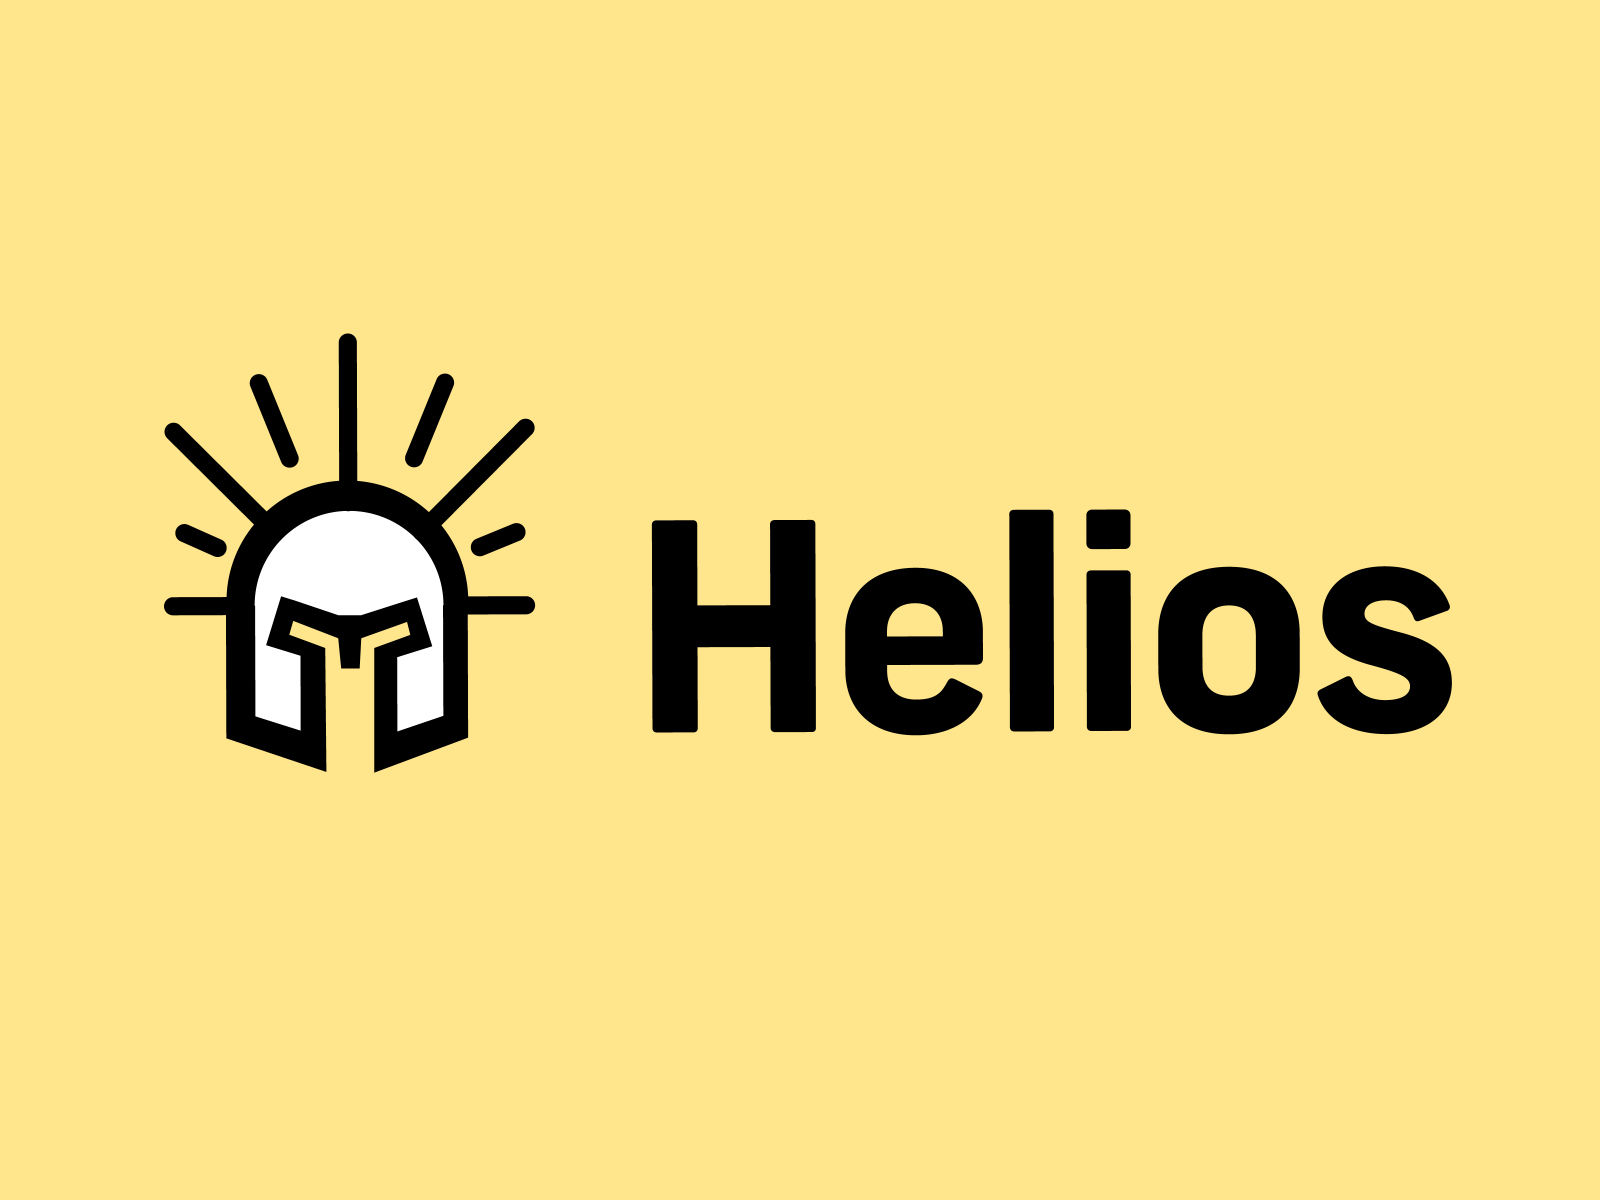 Helios Branding by Chris Edge on Dribbble